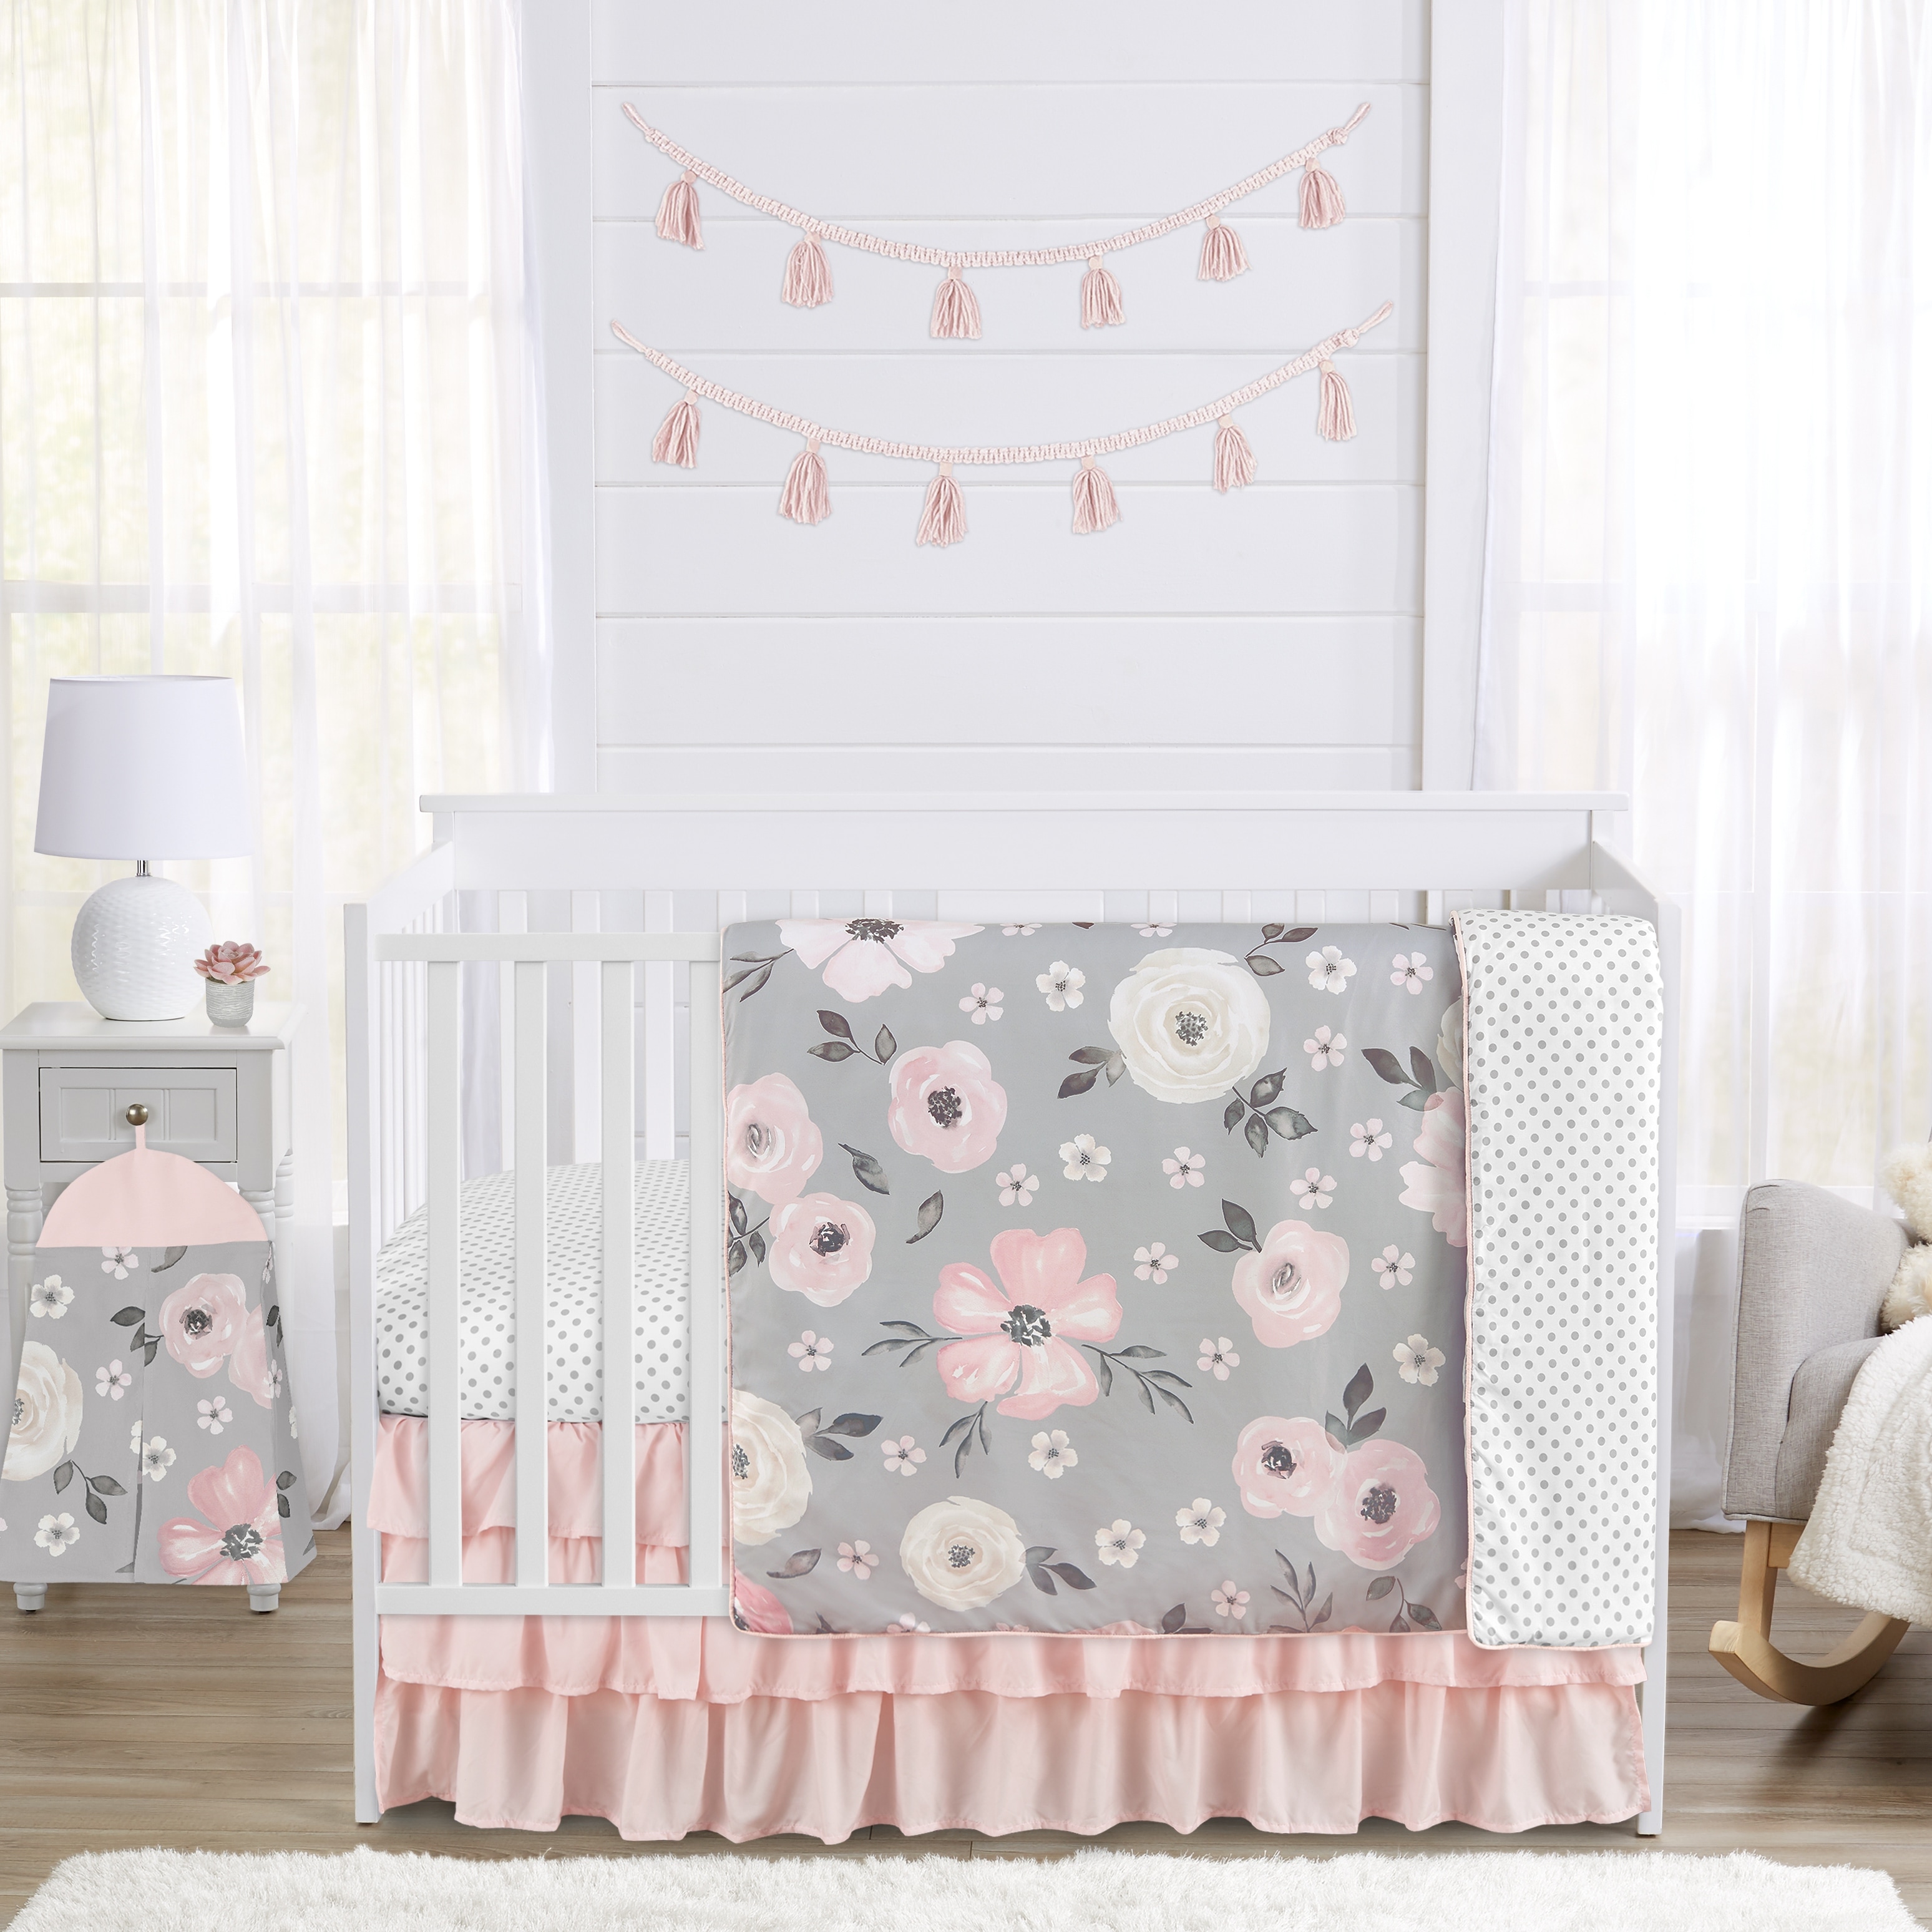 Gorgeous Dust Ruffle Chic Blush Pink Ruffle Crib Skirt for Baby Girl Nursery 